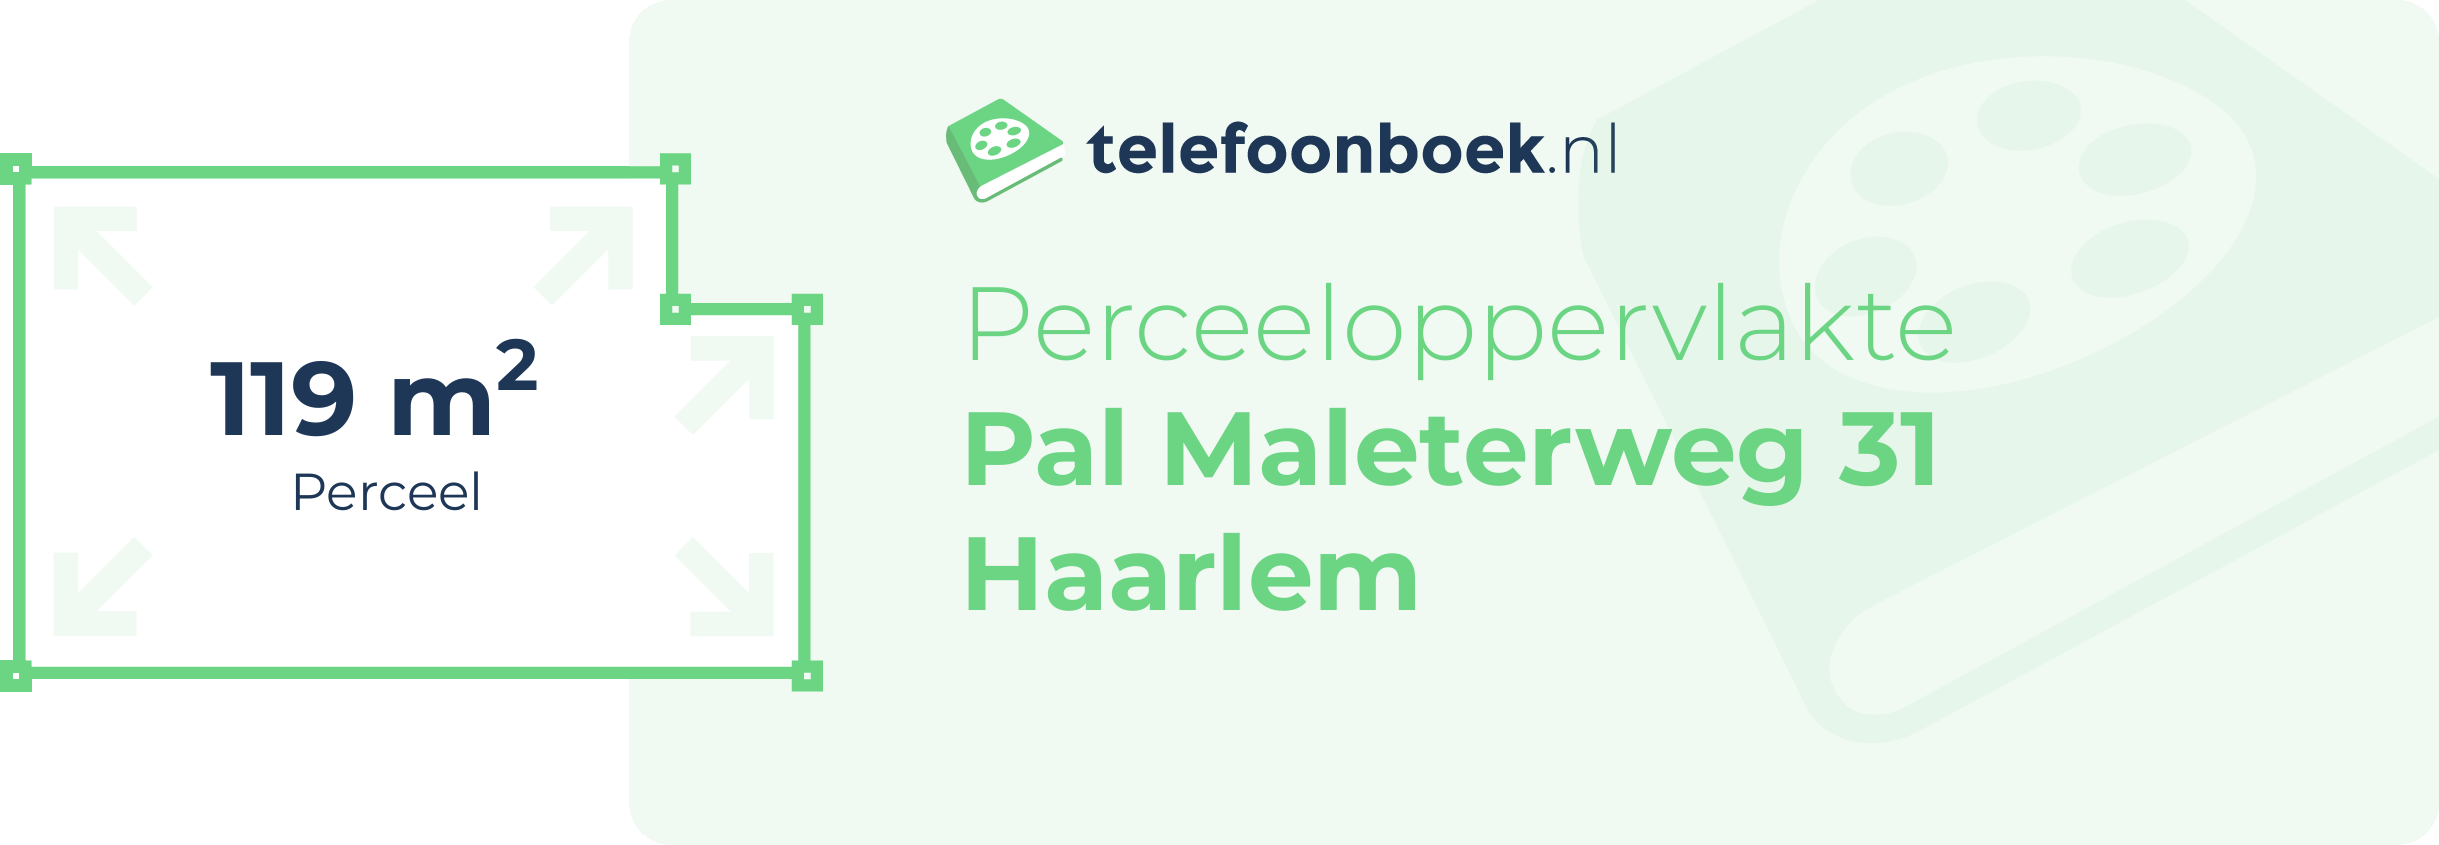 Perceeloppervlakte Pal Maleterweg 31 Haarlem